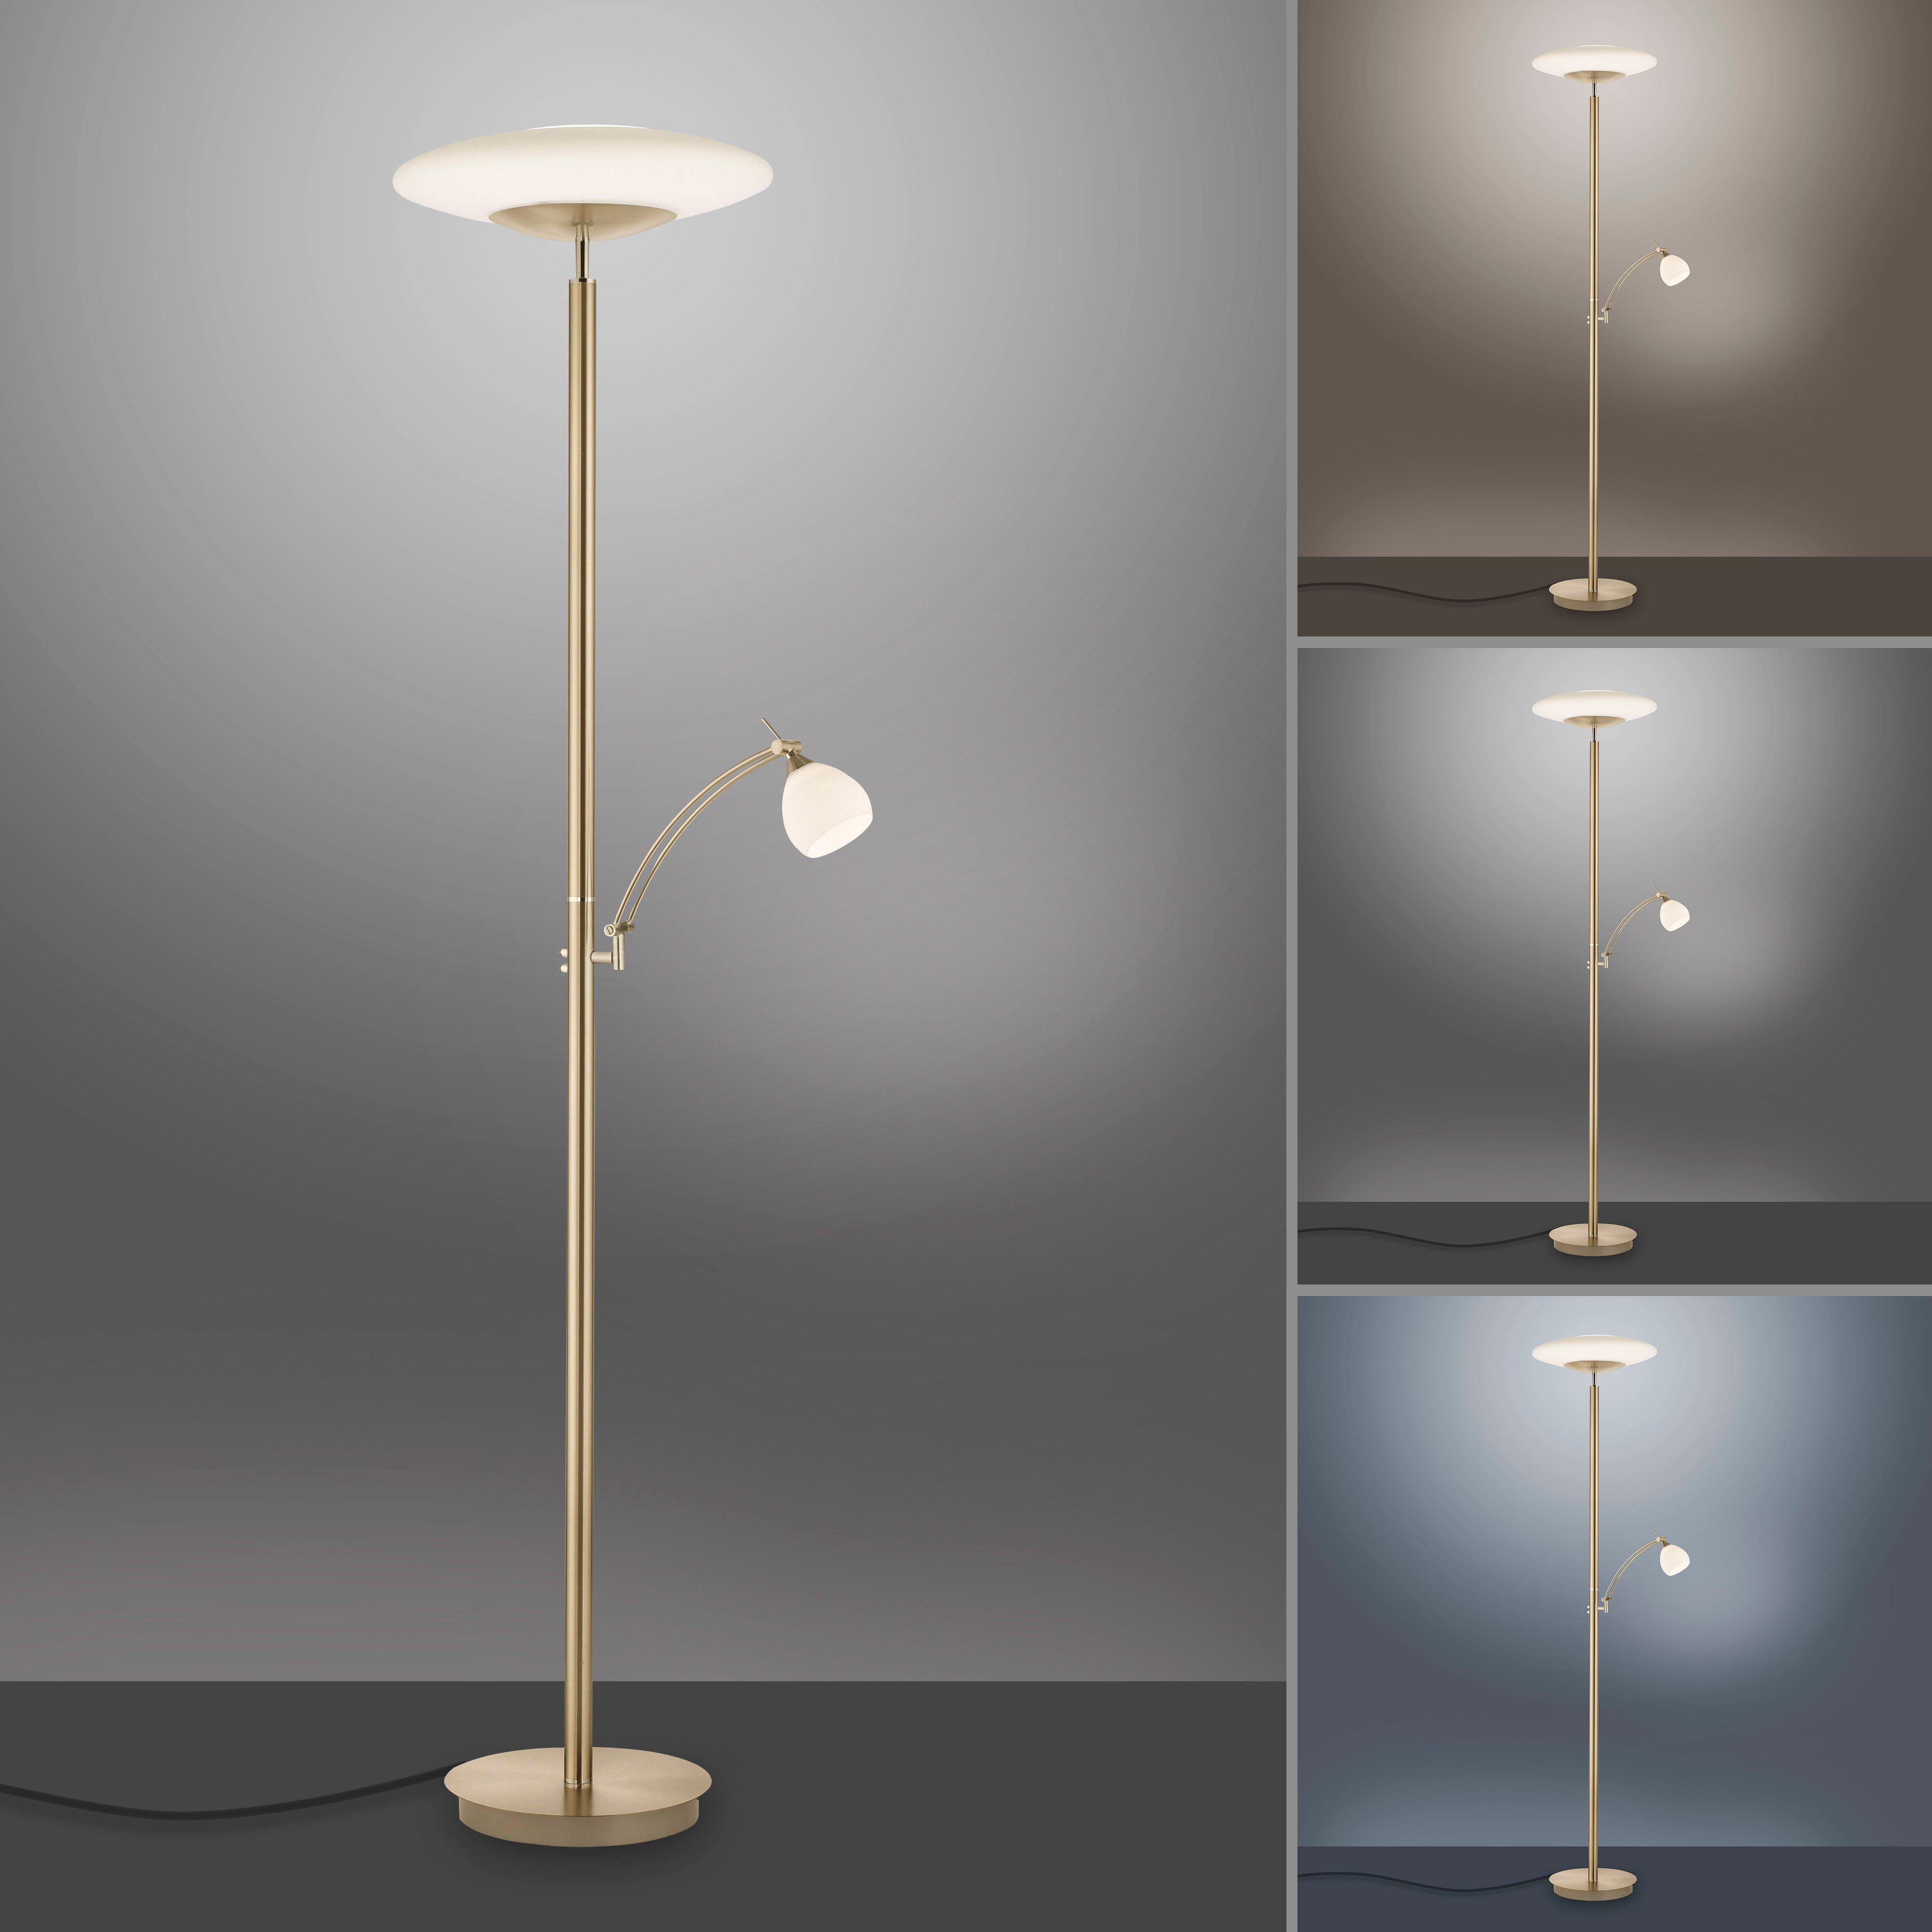 Paul Neuhaus Stehlampe TROJA, LED über CCT - white, warmweiß dimmbar Tastdimmer, - Memory integriert, LED, tunable kaltweiß, fest